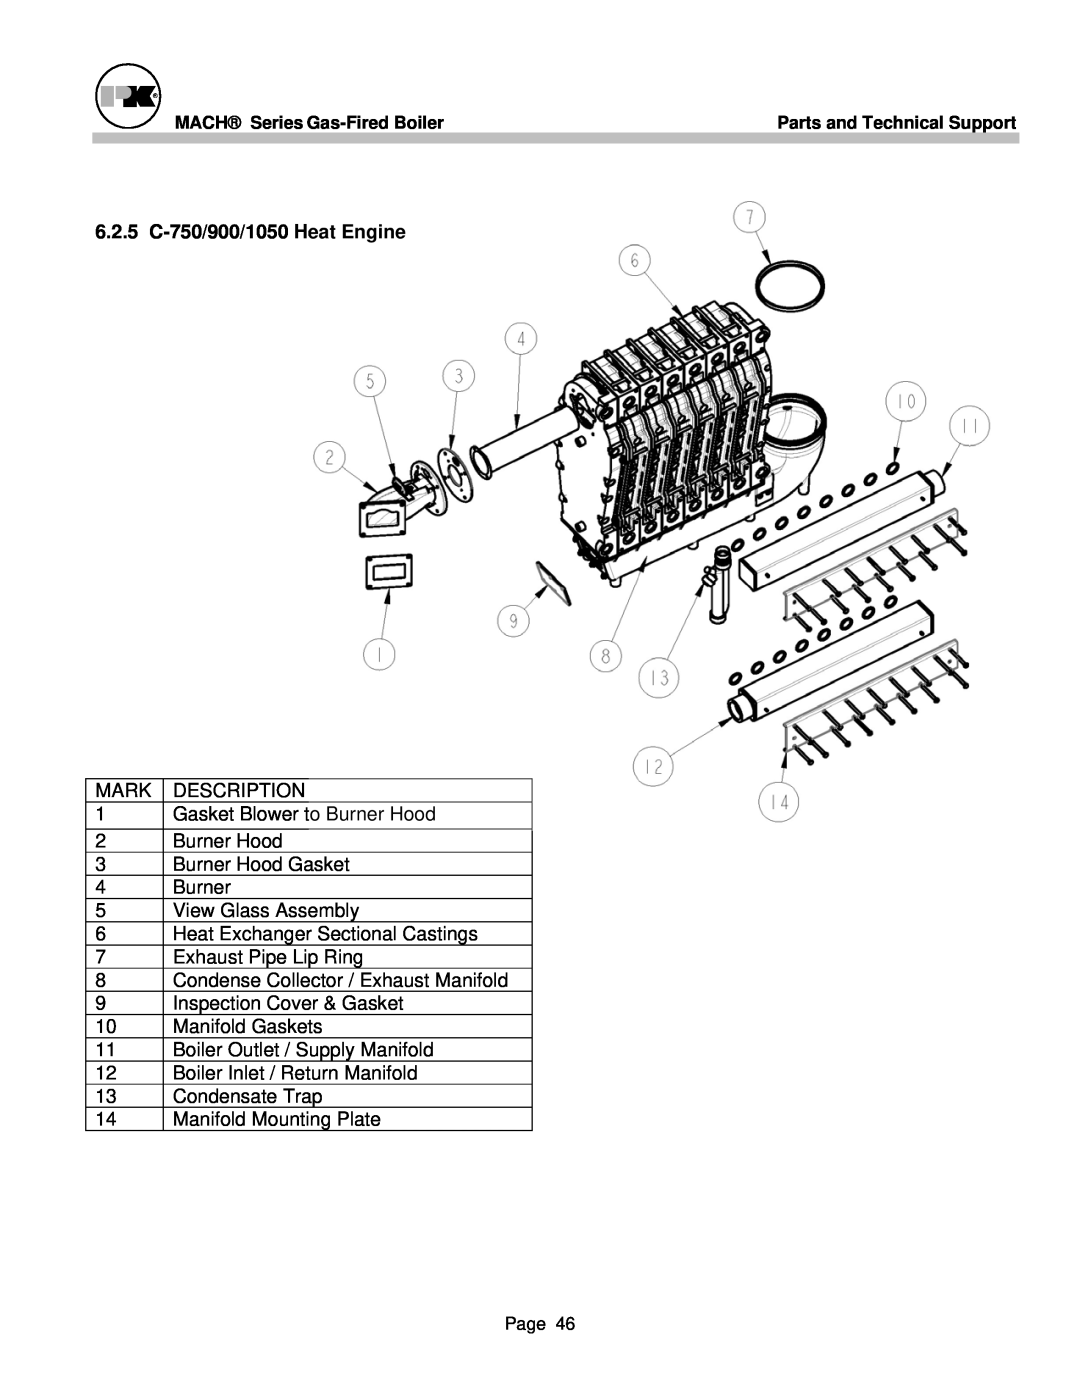 Patterson-Kelley MACH-05 manual 6.2.5 C-750/900/1050Heat Engine 